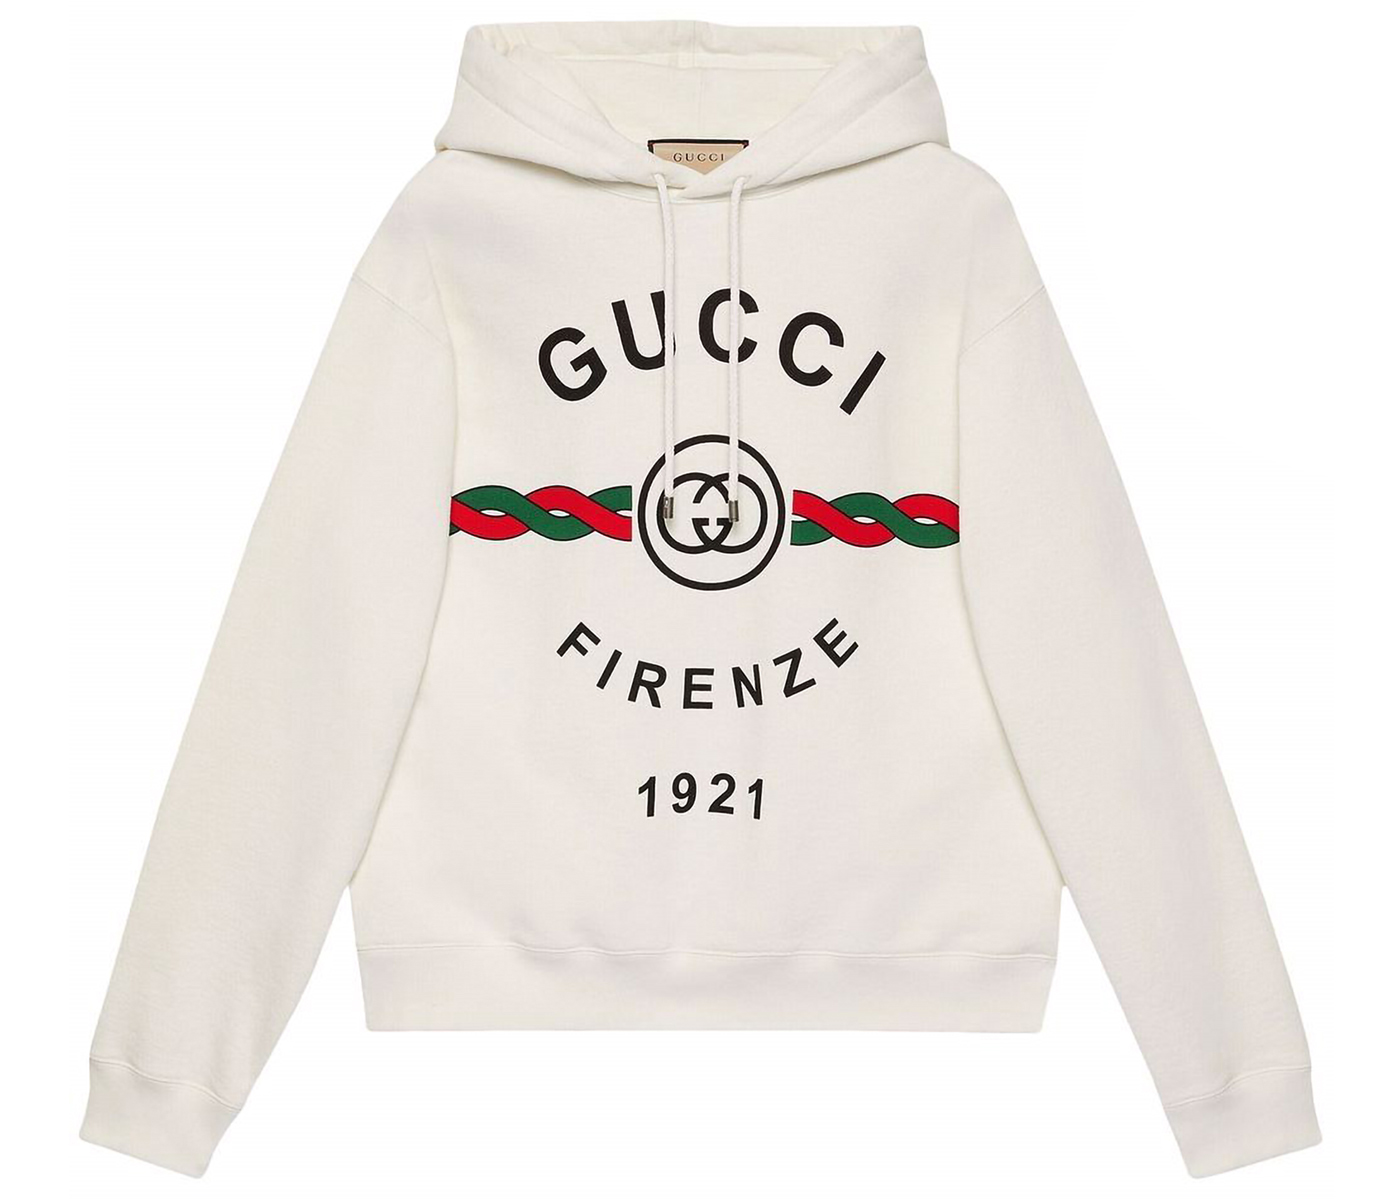 Gucci Firenze Popover Hoody White Men's - FW22 - US